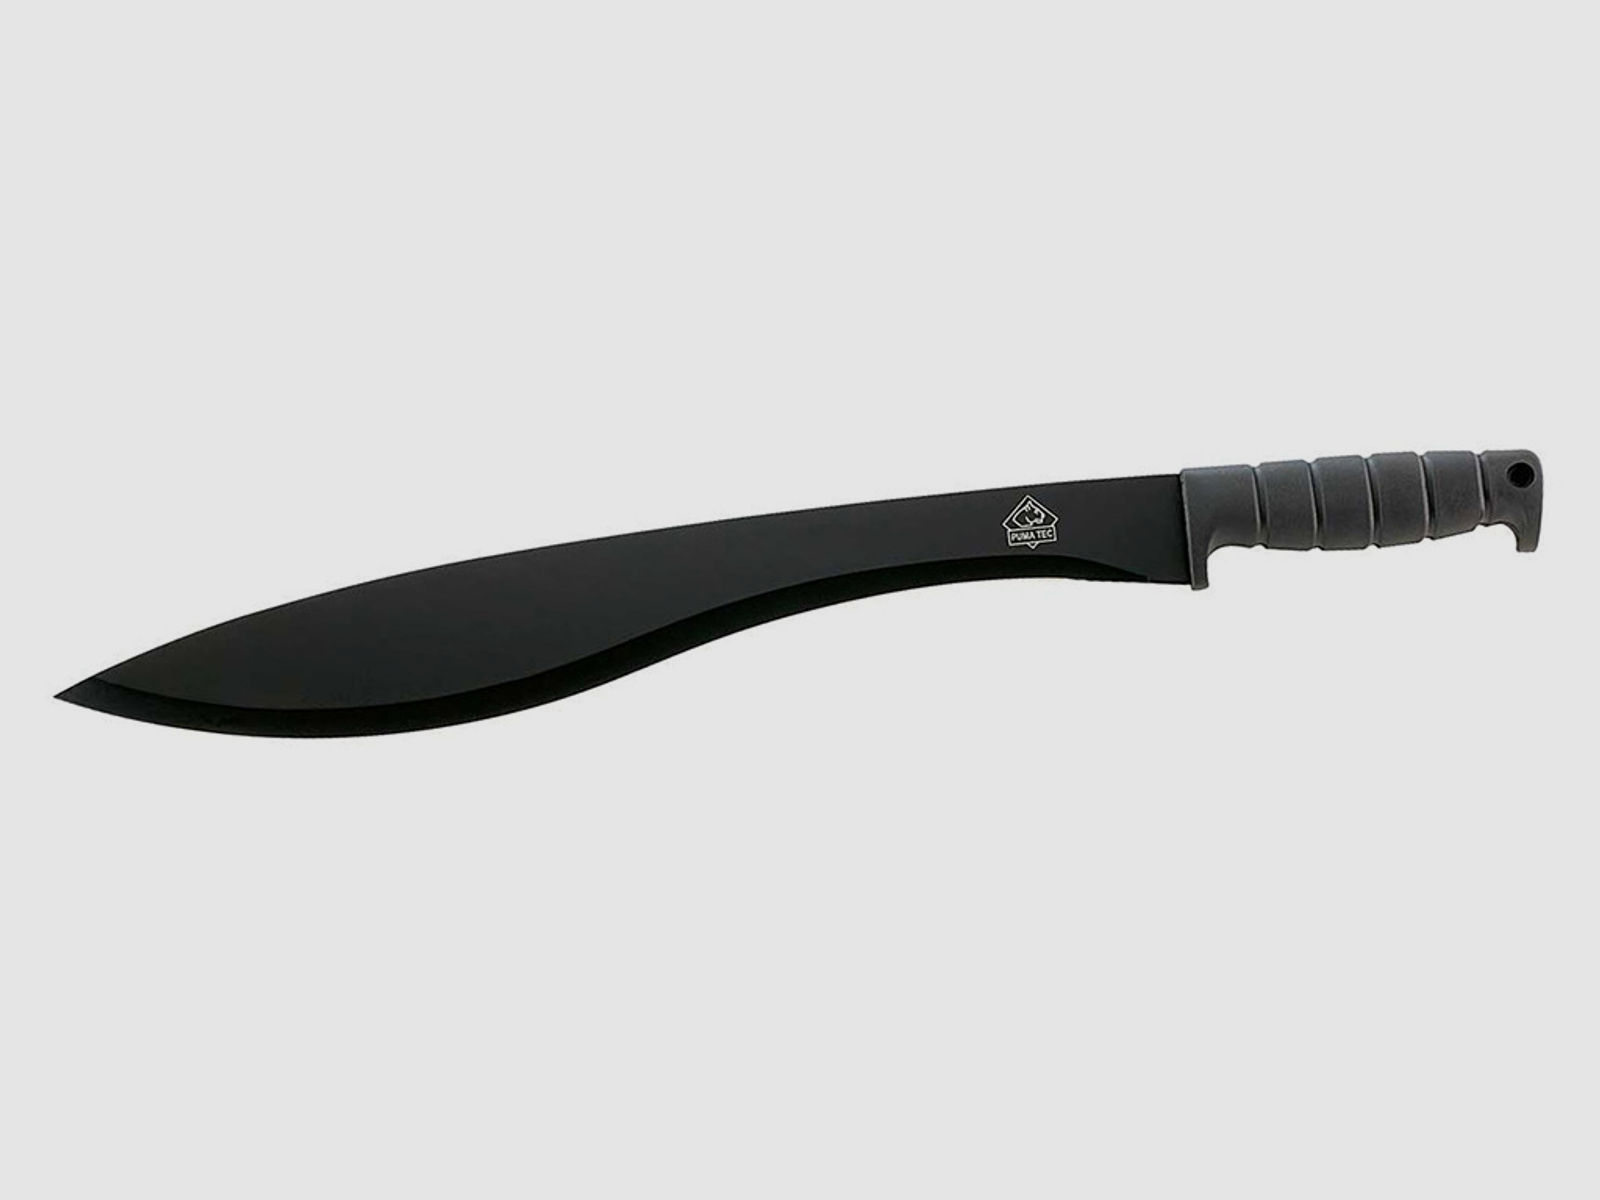 Machete Kukri-Machete gerade Puma Tec Stahl AISI 420 KlingenlĂ¤nge 41,8 cm inklusive Nylonscheide (P18)